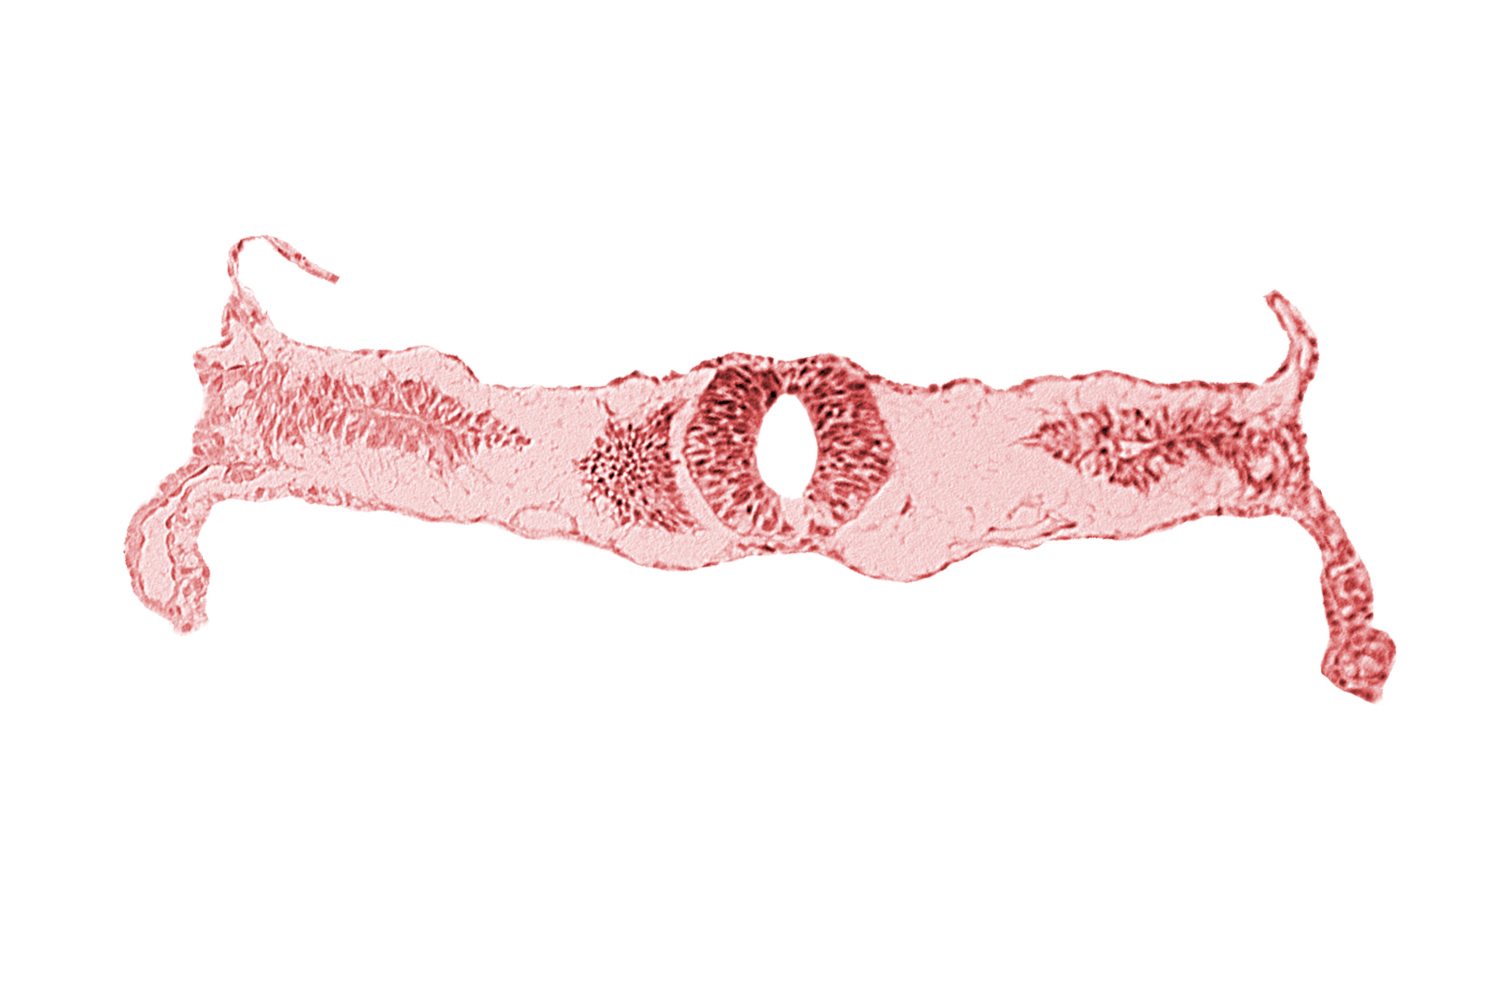 amnion attachment, amniotic cavity, extra-embryonic coelom, midgut, neural tube [rhombencephalon (Rh. D)], primordial peritoneal cavity, right umbilical vein, somite 3-4 intersegmental region, umbilical vesicle cavity, umbilical vesicle wall